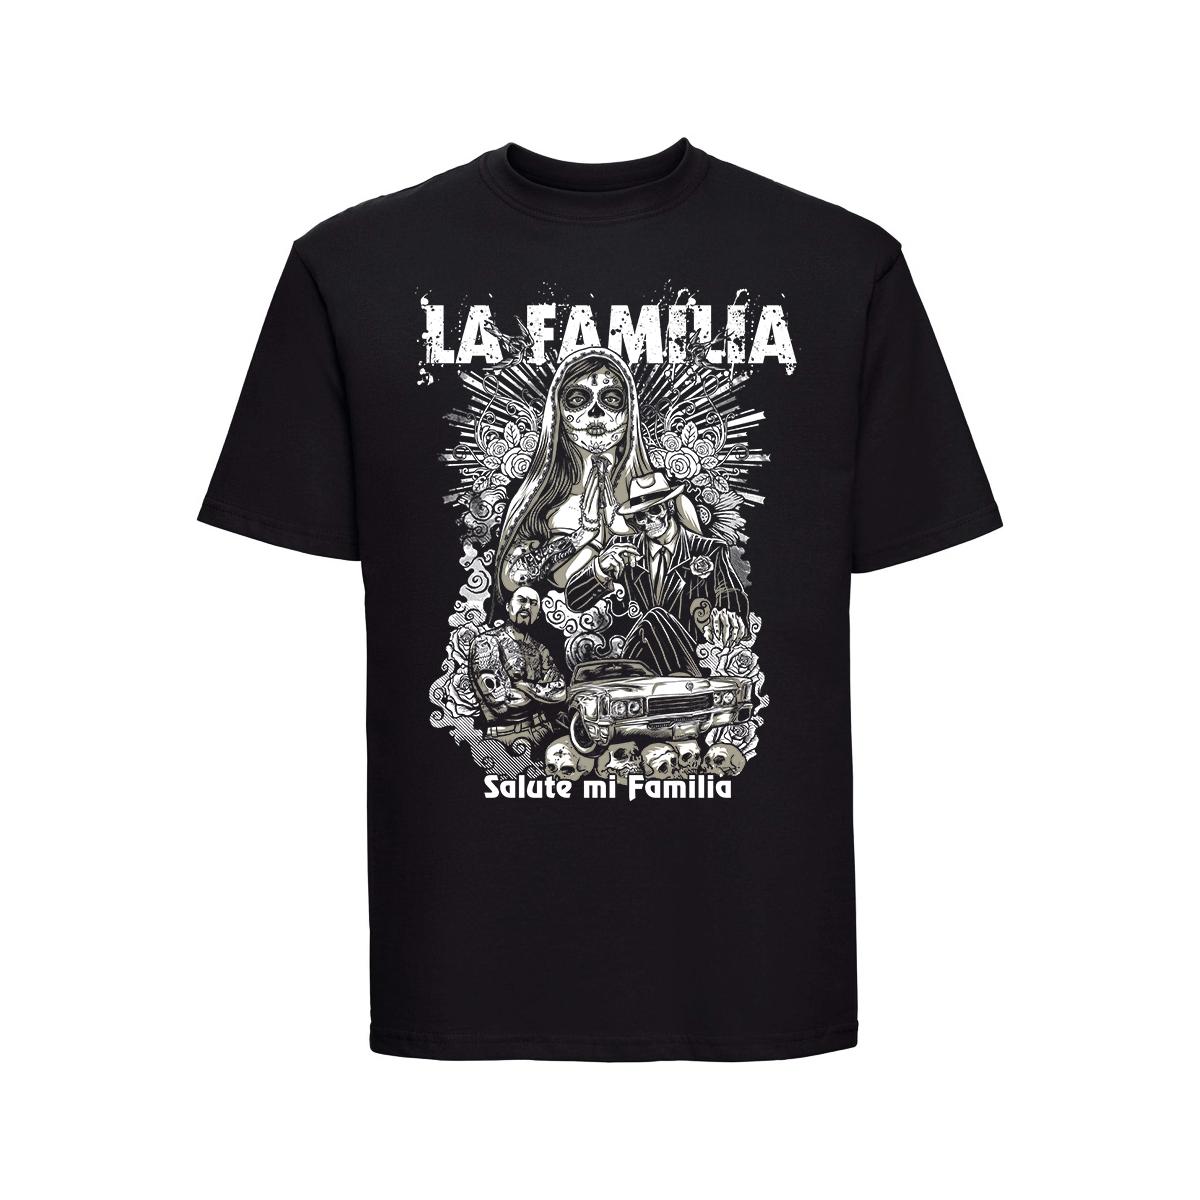 La Familia - Männer T-Shirt - Salute mi familia - schwarz